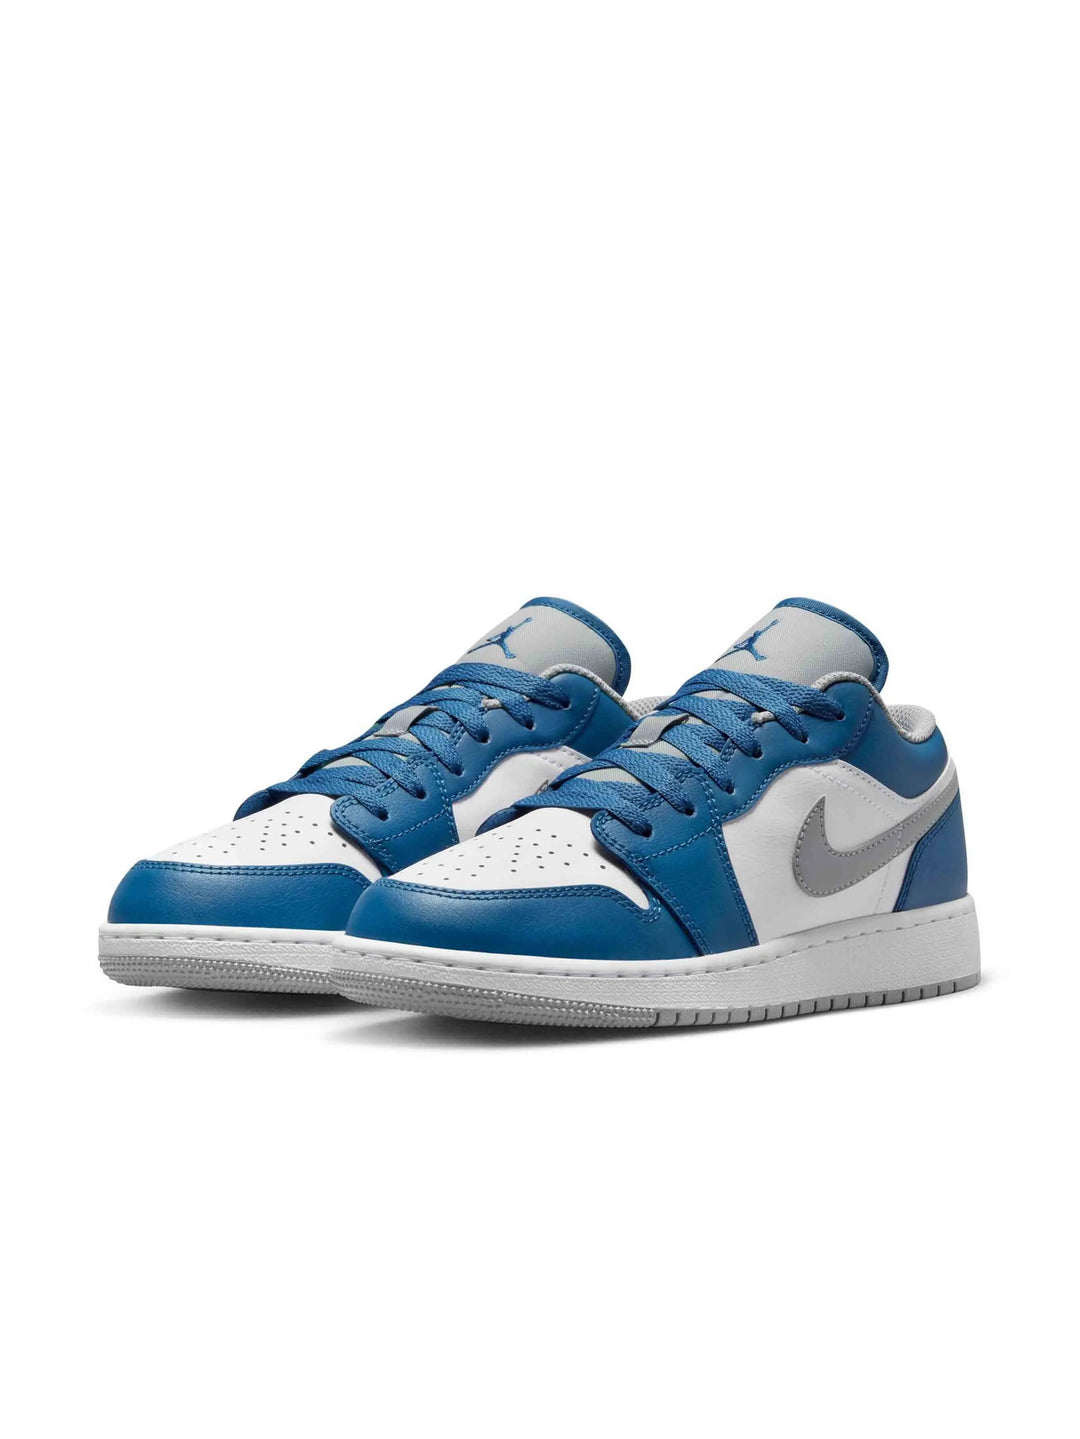 Nike Air Jordan 1 Low True Blue (GS) Prior